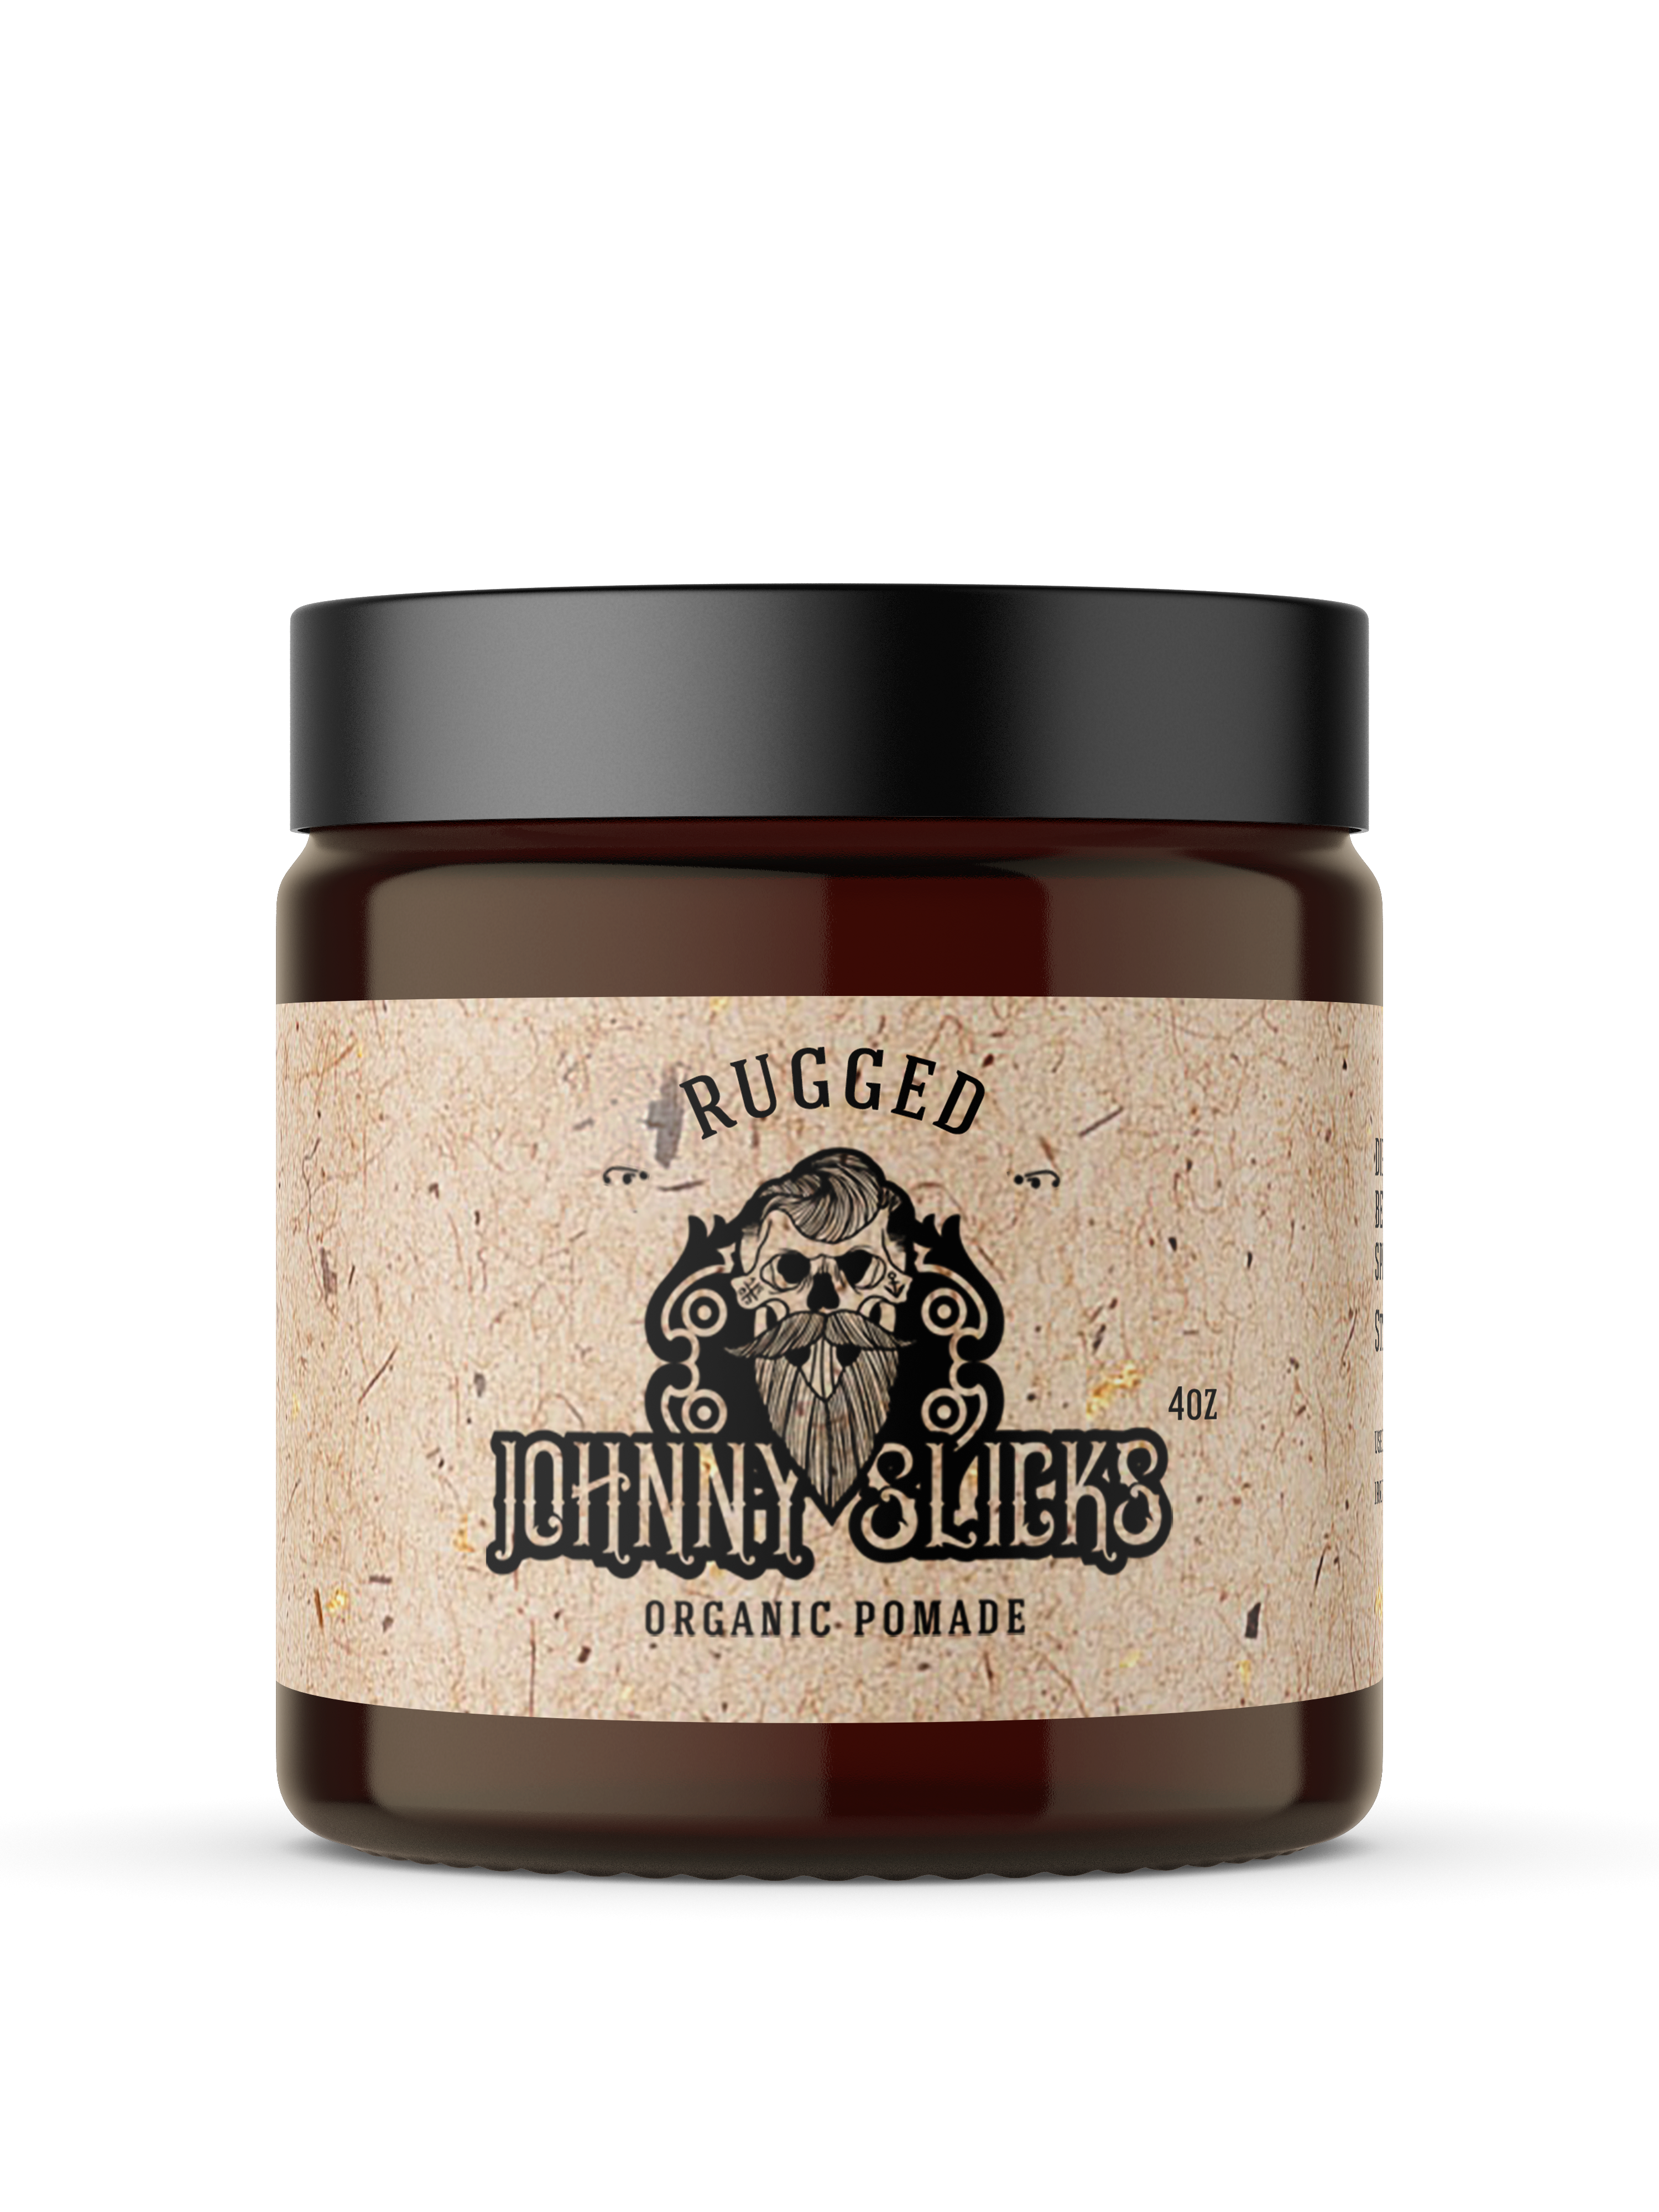 Johnny Slicks - Organic Oil Based Pomade Rugged